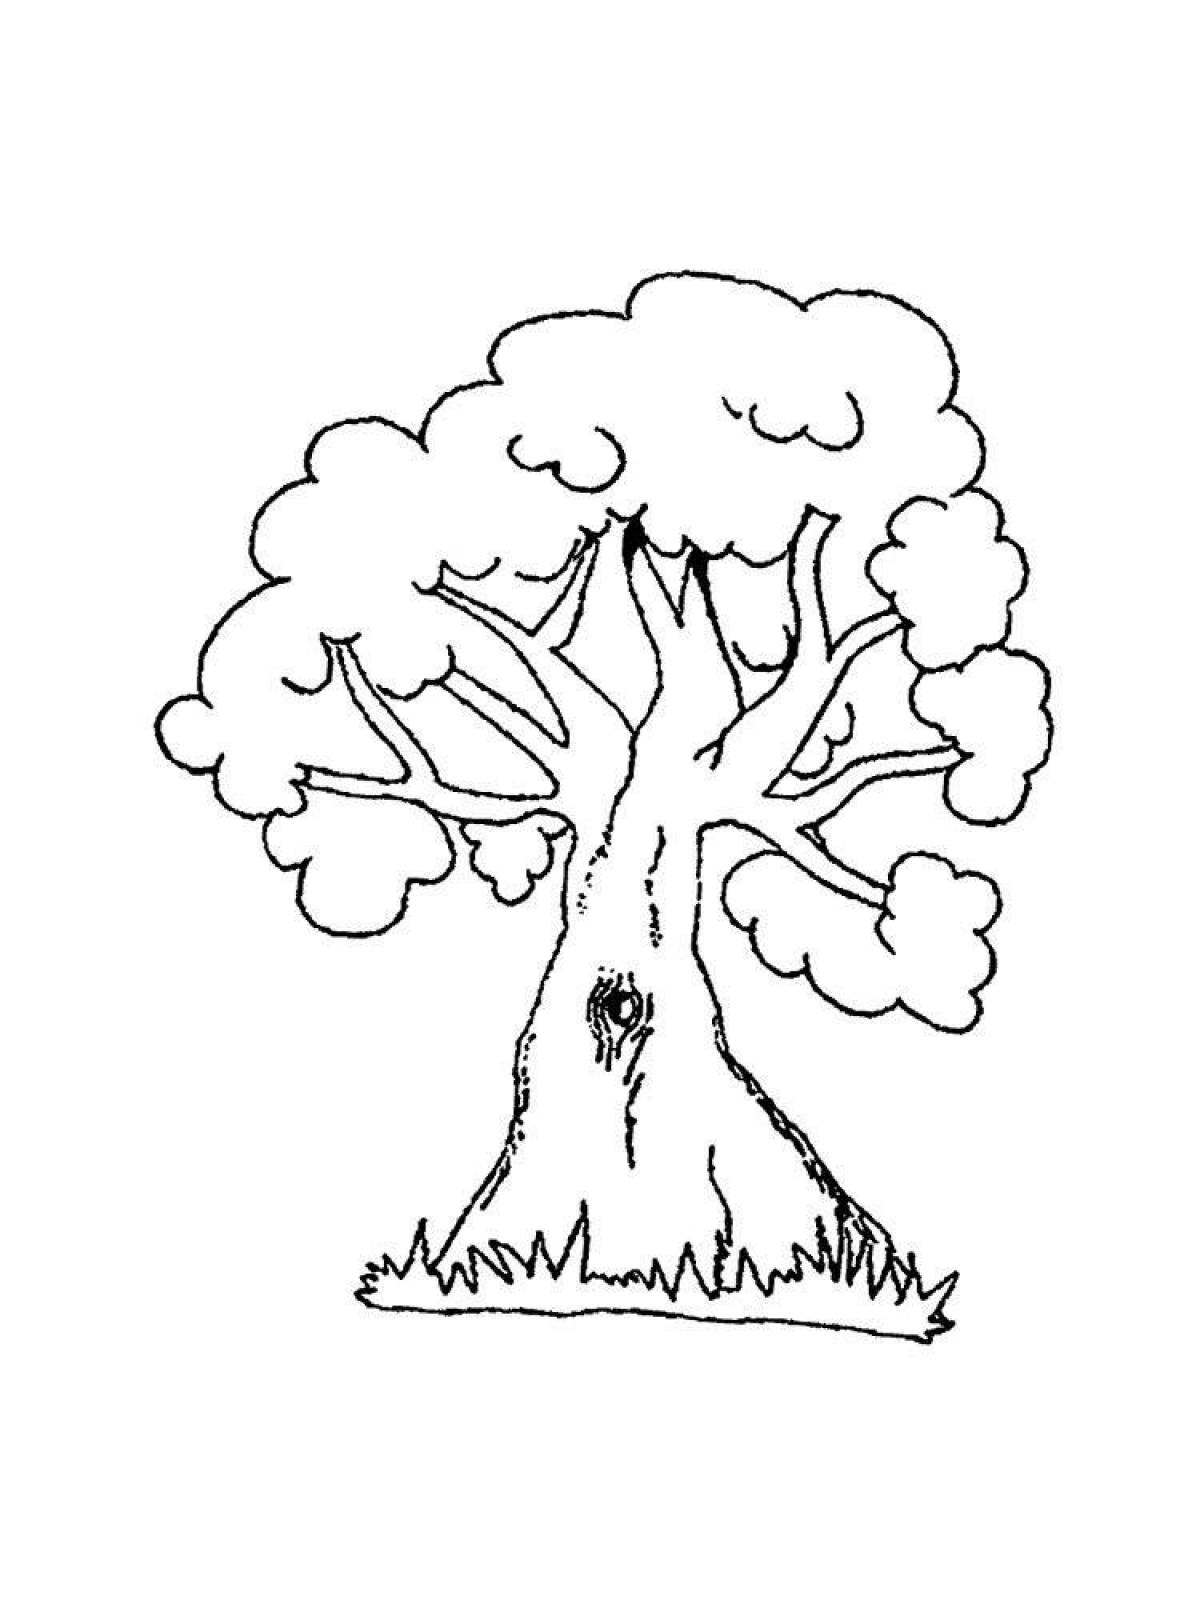 Fun tree coloring for kids